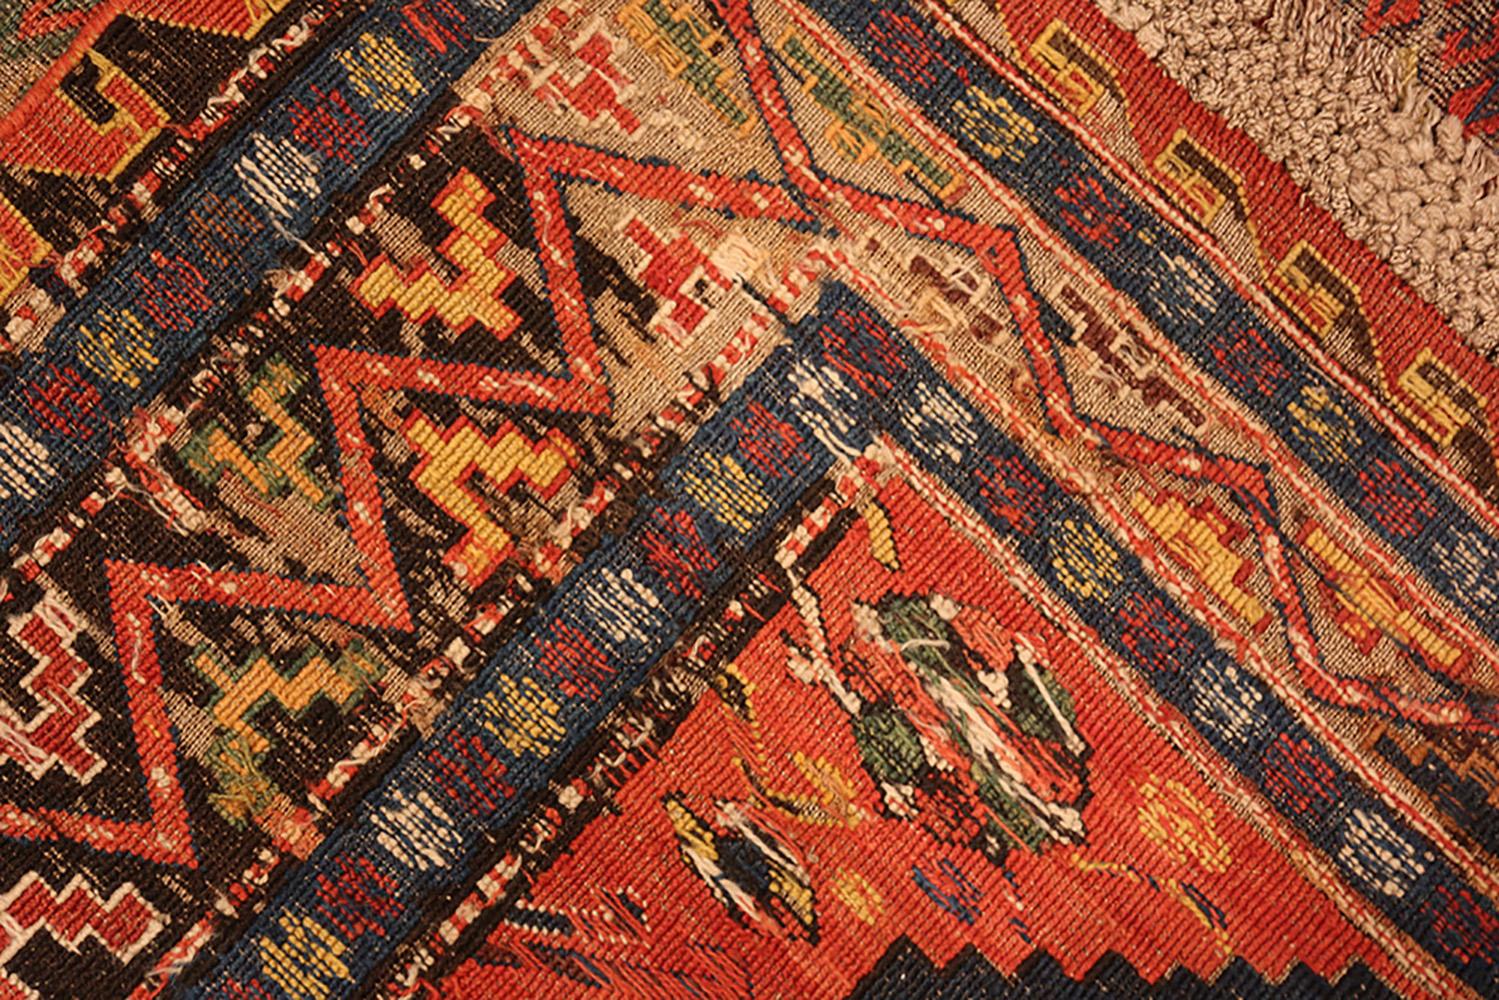 Antique Shabby Chic Tribal Caucasian Soumak, Country of Origin / Rug Type: Caucasian Rugs, Circa date: 1860. Size: 7 ft 4 in x 10 ft 3 in (2.24 m x 3.12 m)

The true beauty of this 19th century antique shabby chic Caucasian Soumak rug lies in the